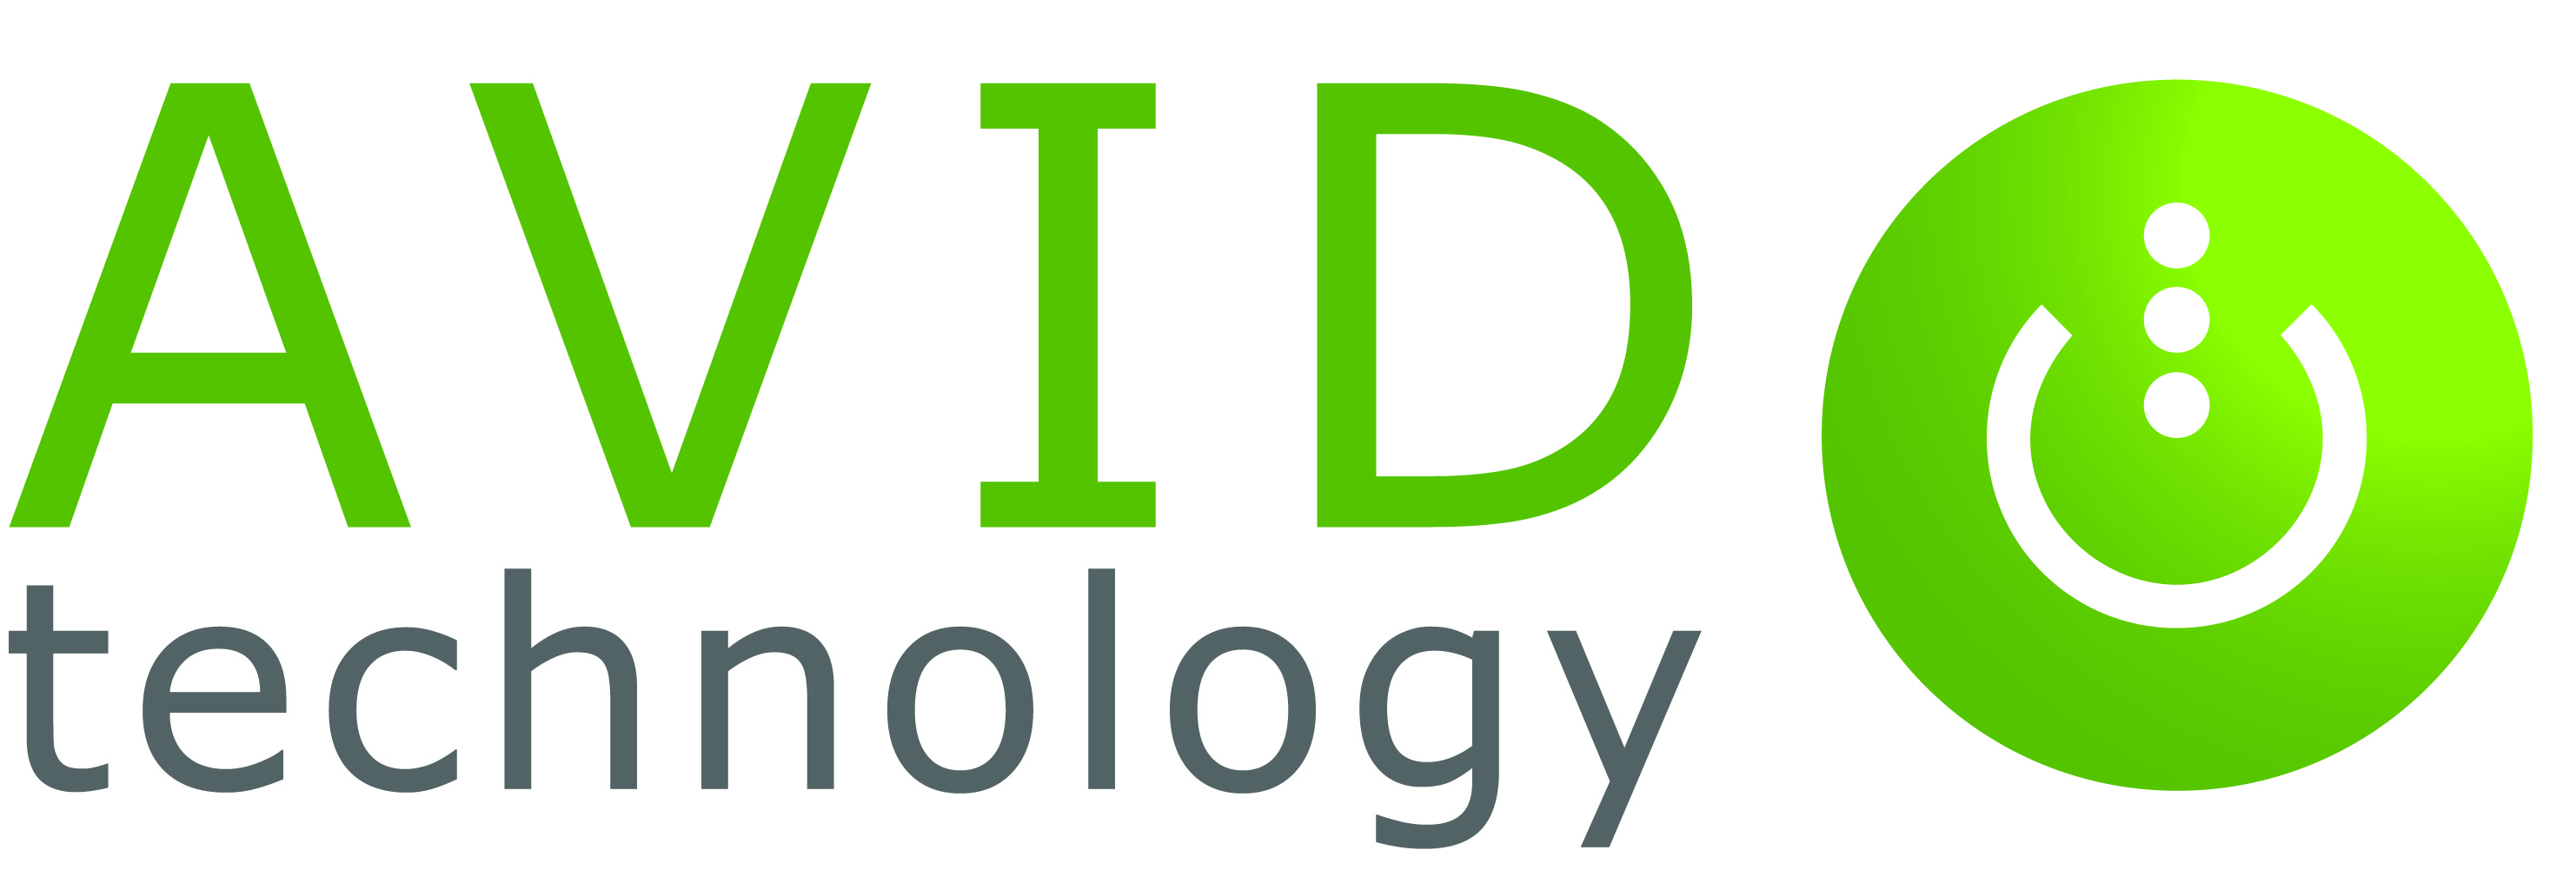 Avid Technology Group